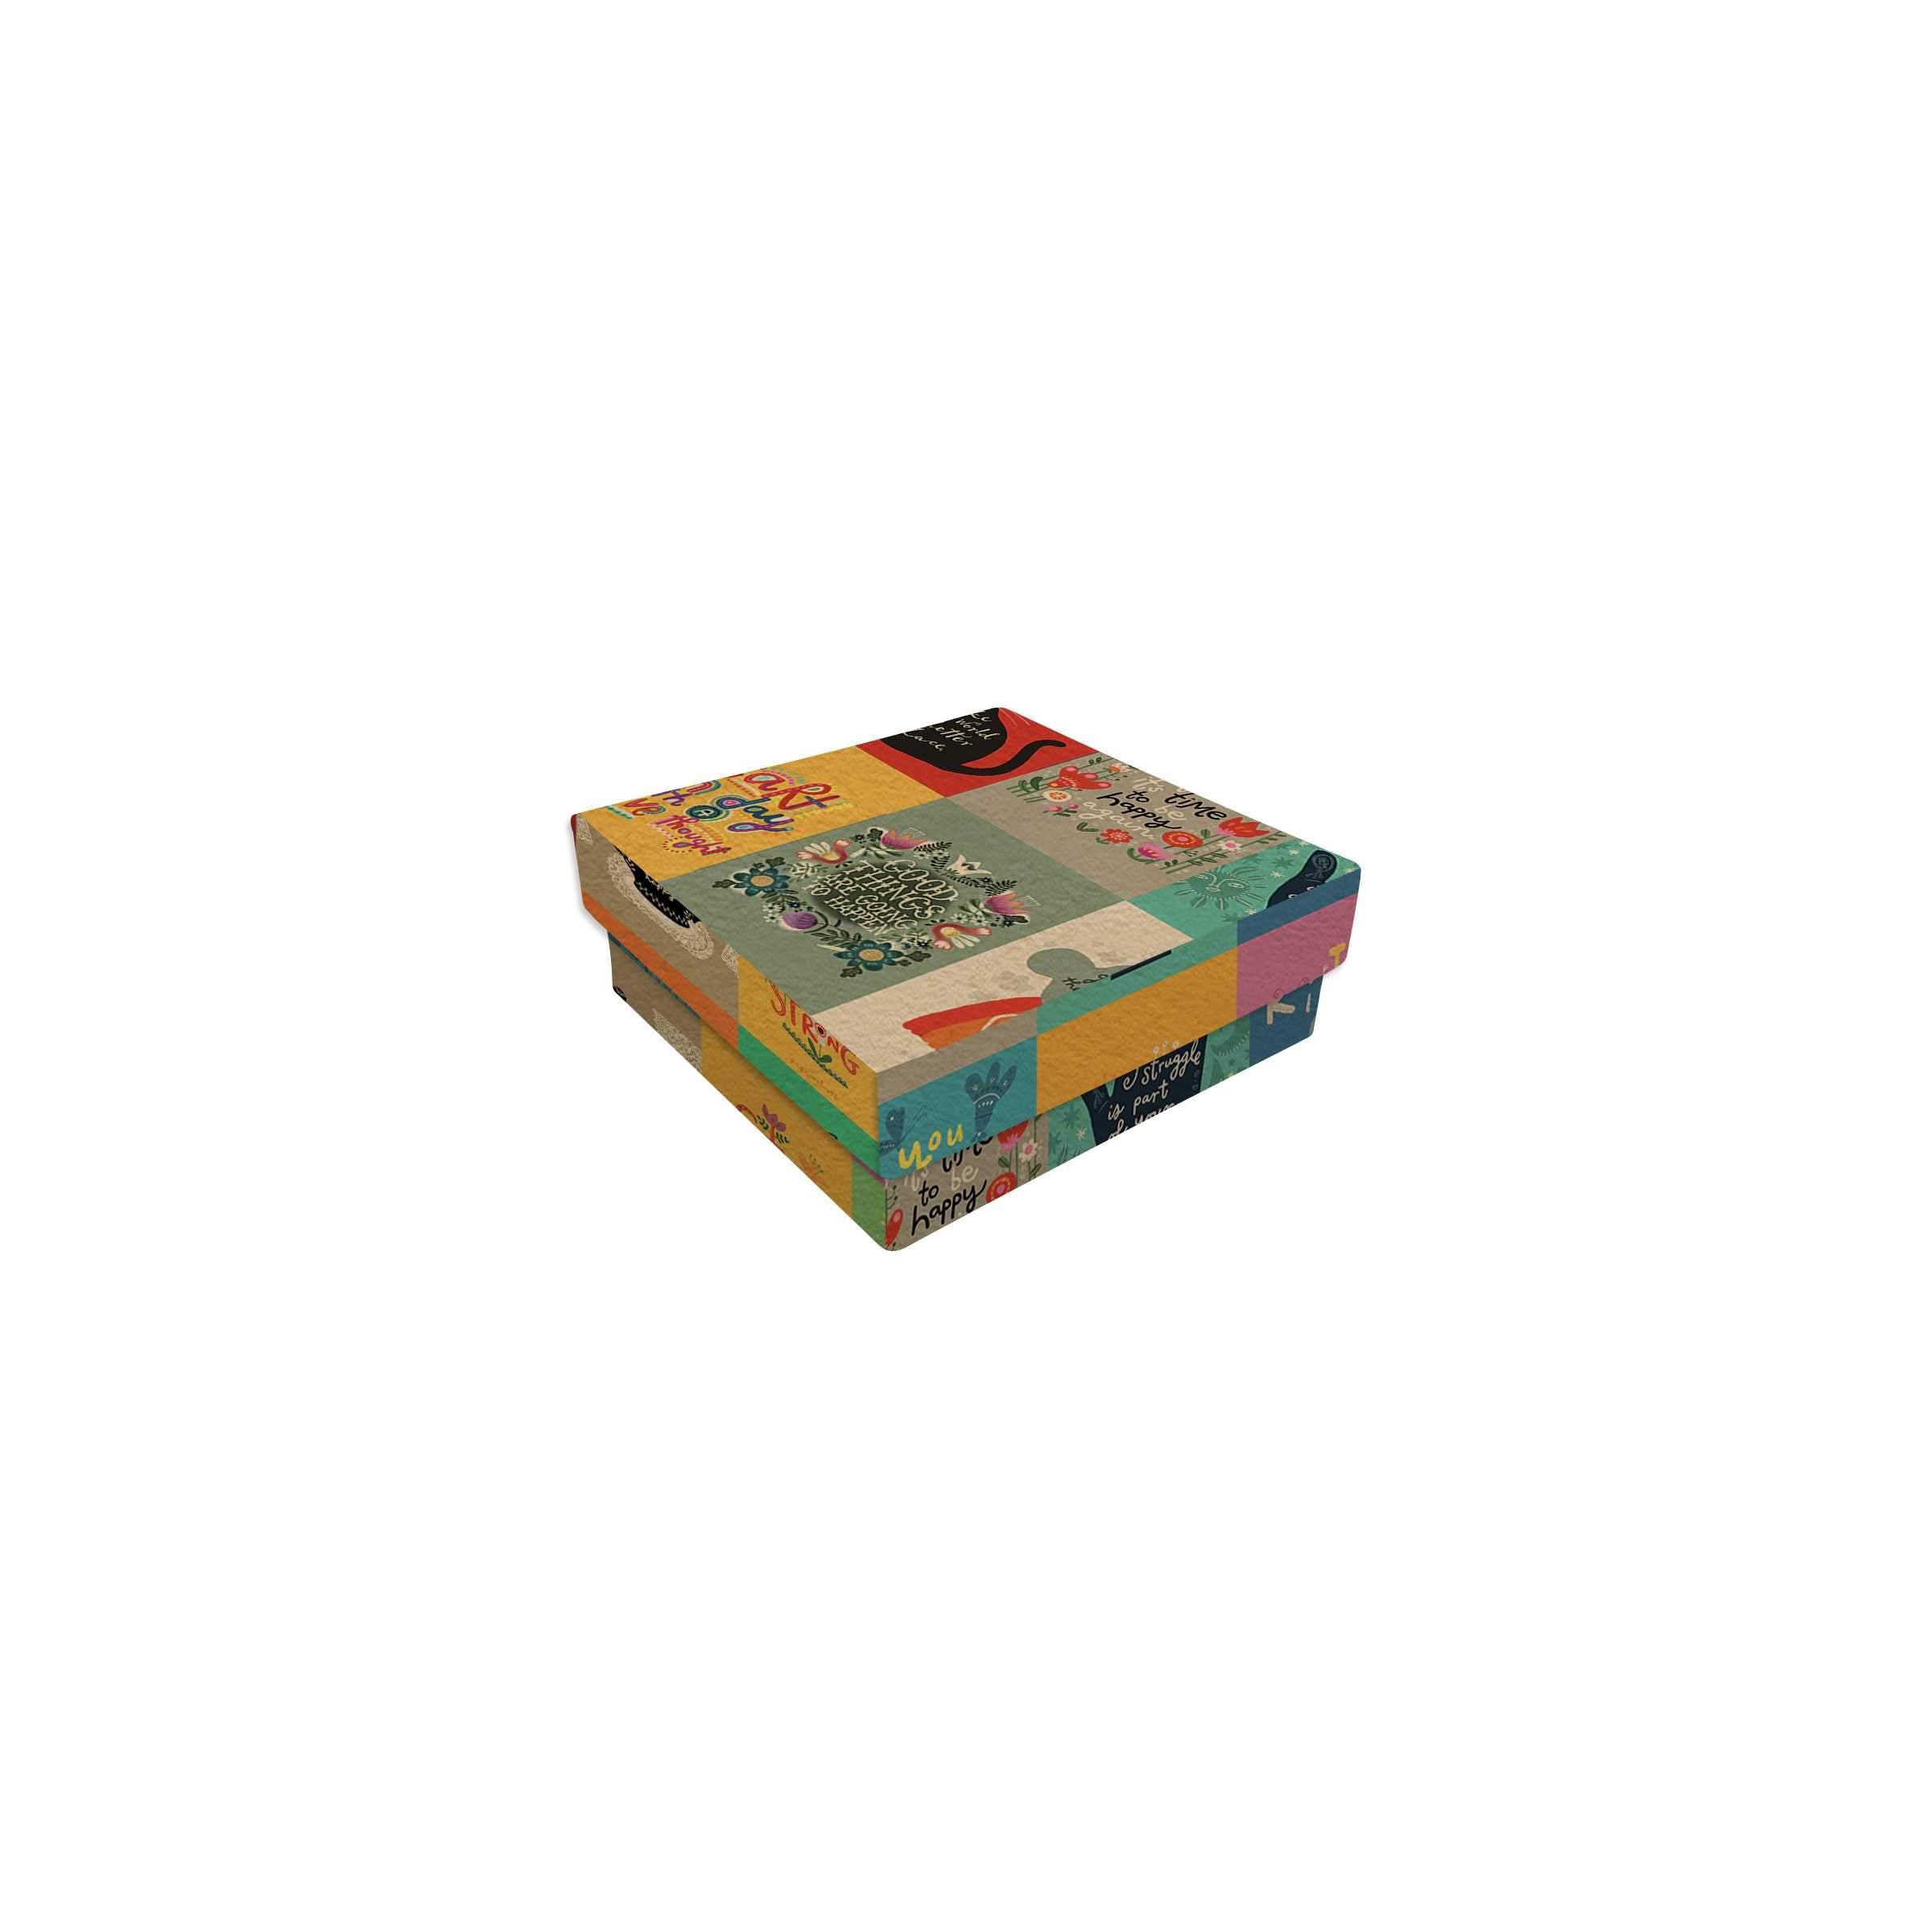 Square Gift Box: 2.75" x 2.75" x 1"